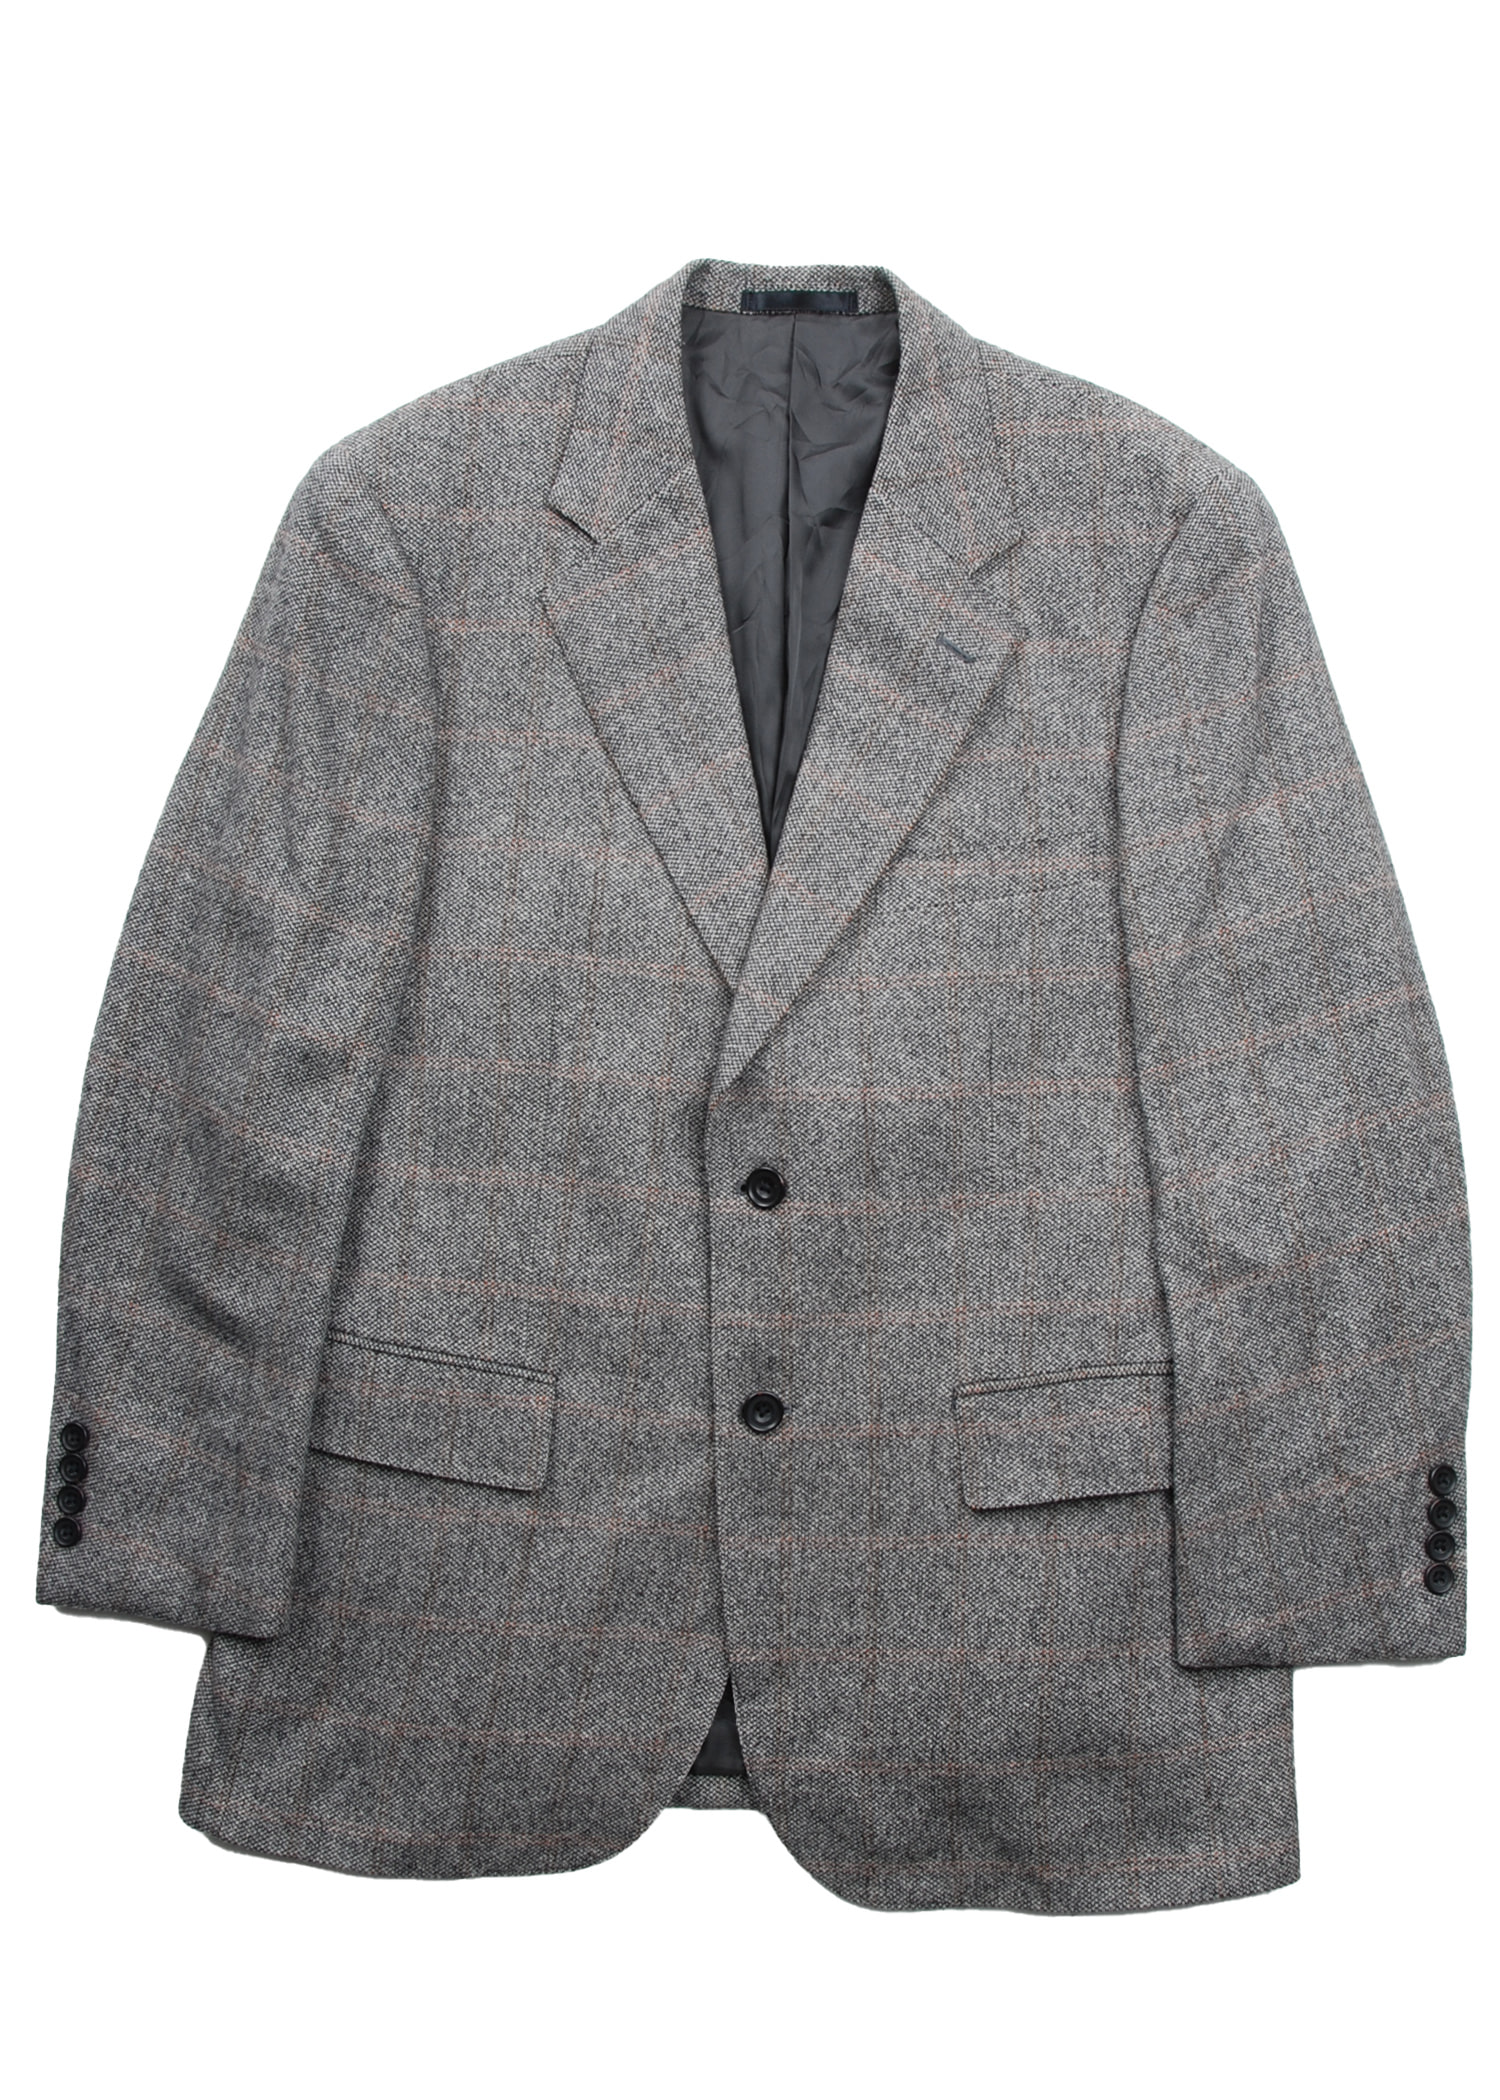 CHAPS by Ralph Lauren check jacket